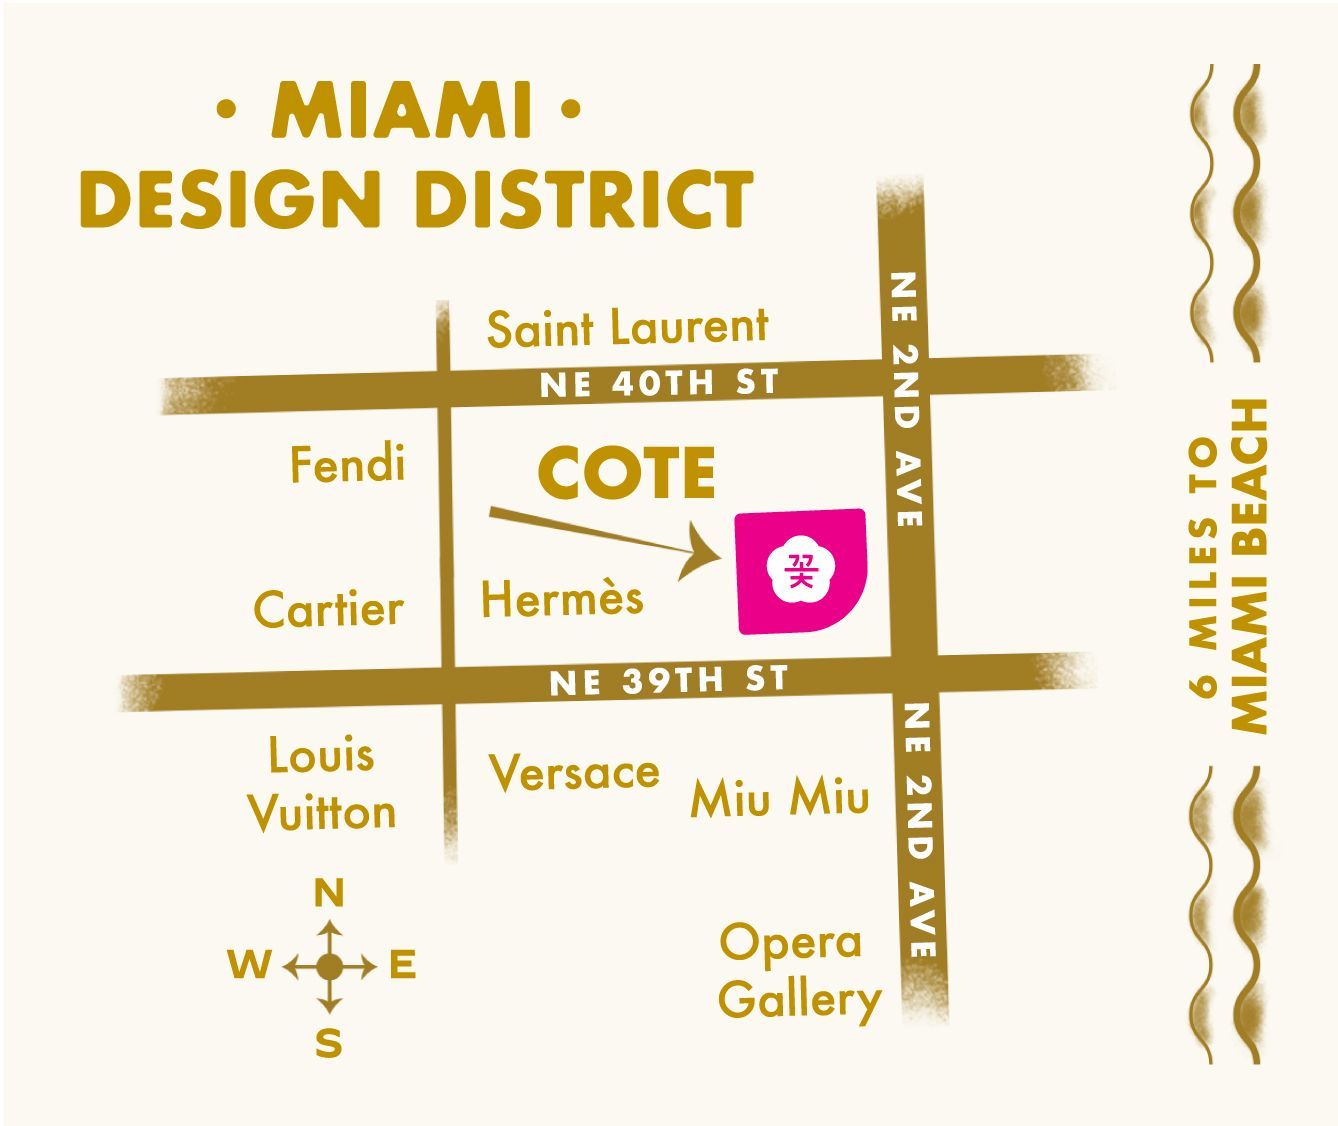 The Top 3 Restaurants in the Miami Design District